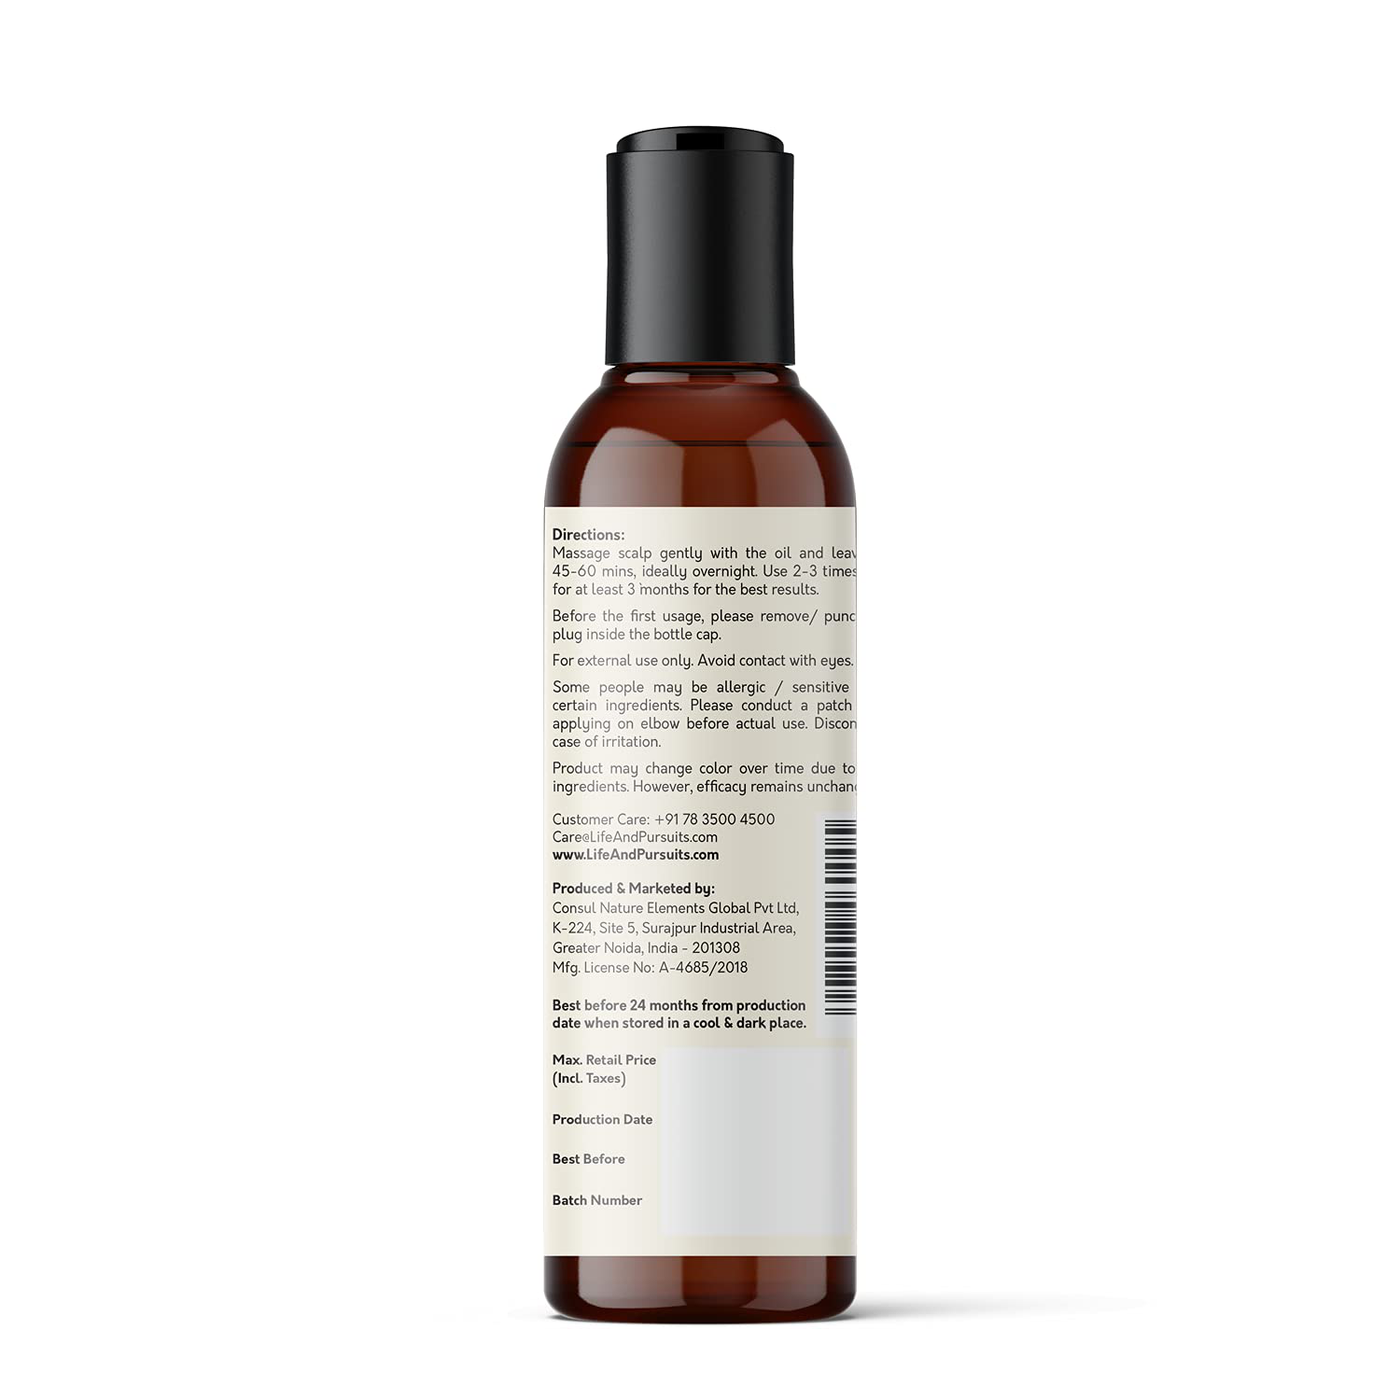 Life & Pursuits Organic Hair Growth Oil (3.38 fl oz) - Ayurvedic Scalp Therapy Oil for Healthy Hair, Goodness of Bhringraj, Amla, Coconut, Sesame, Almond, Onion, & Castor Oil